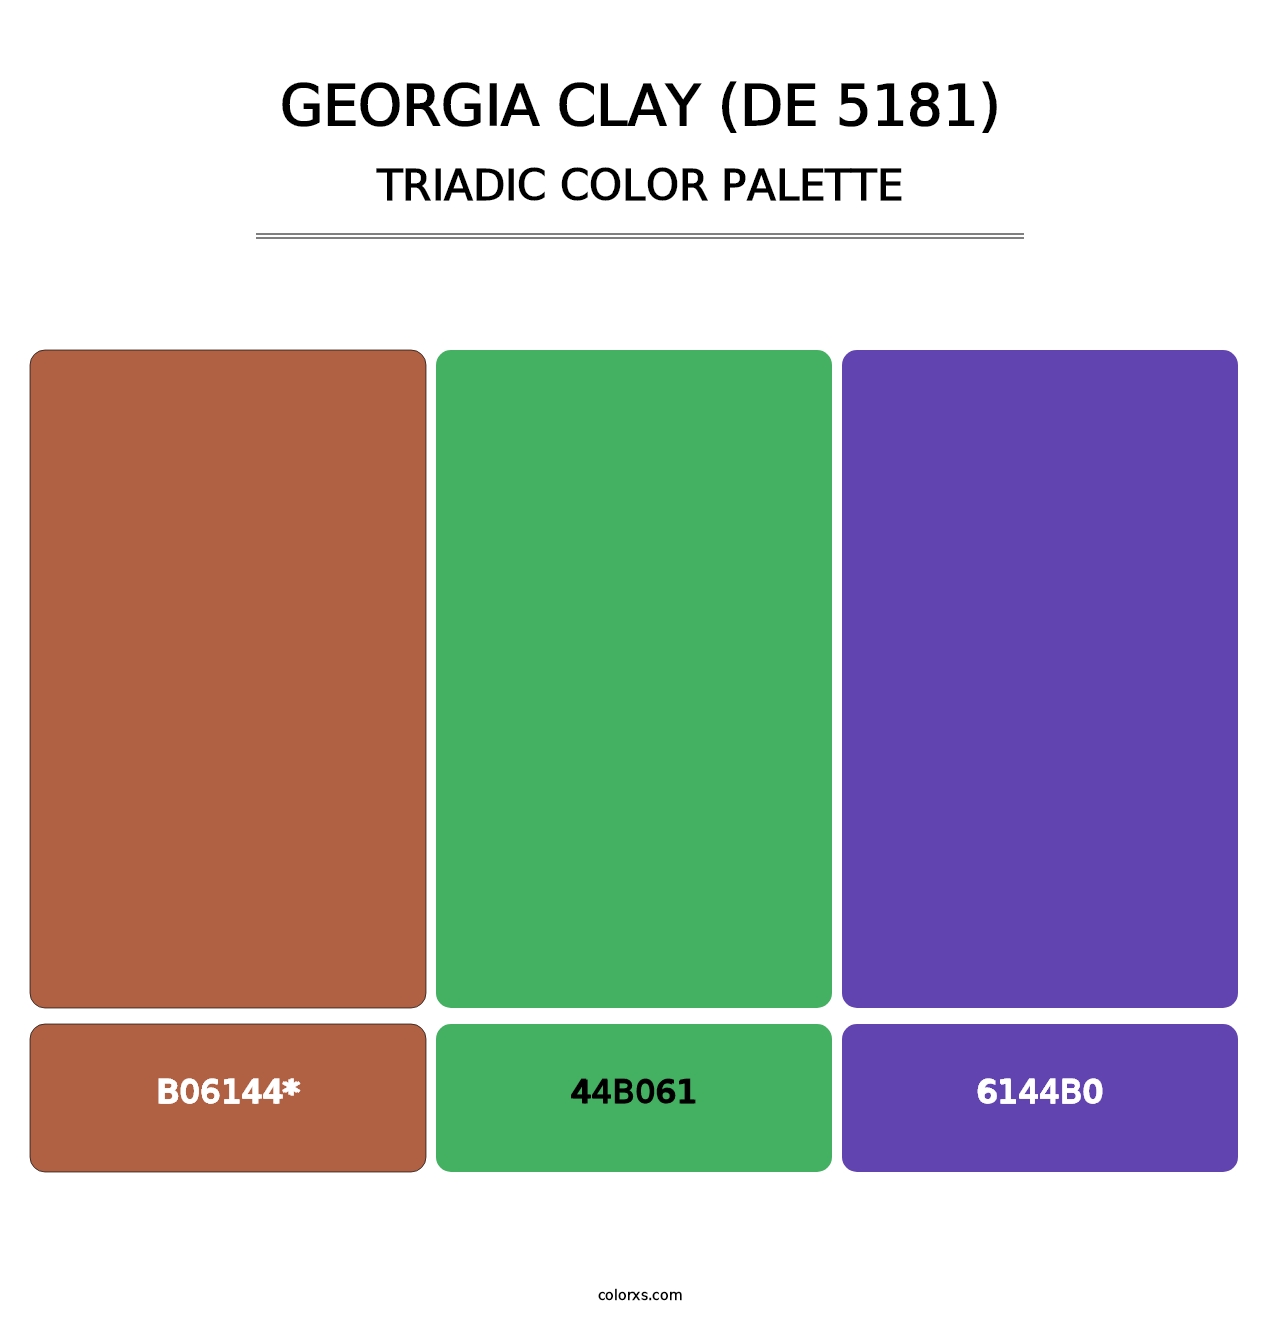 Georgia Clay (DE 5181) - Triadic Color Palette